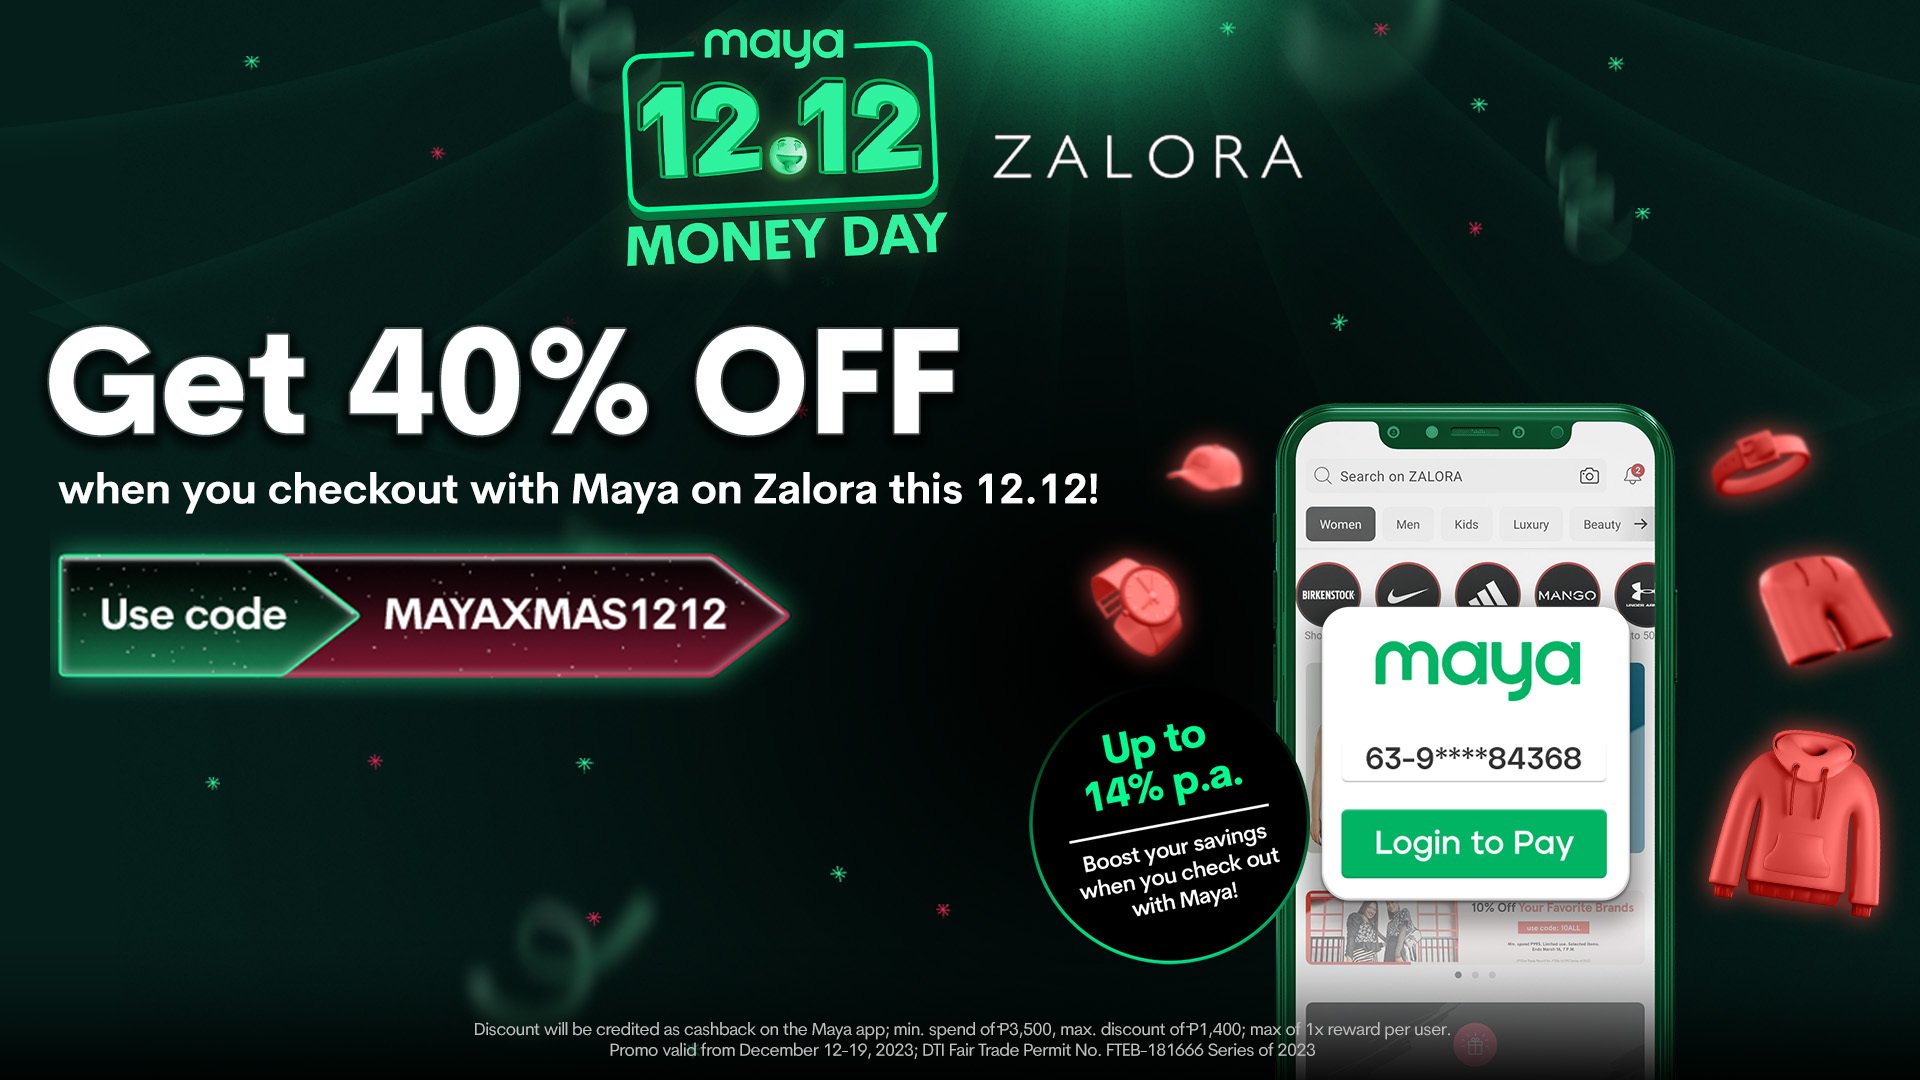 120623_Maya-NL_Zalora-12.12-Holiday-Promo_Deals 1920x1080